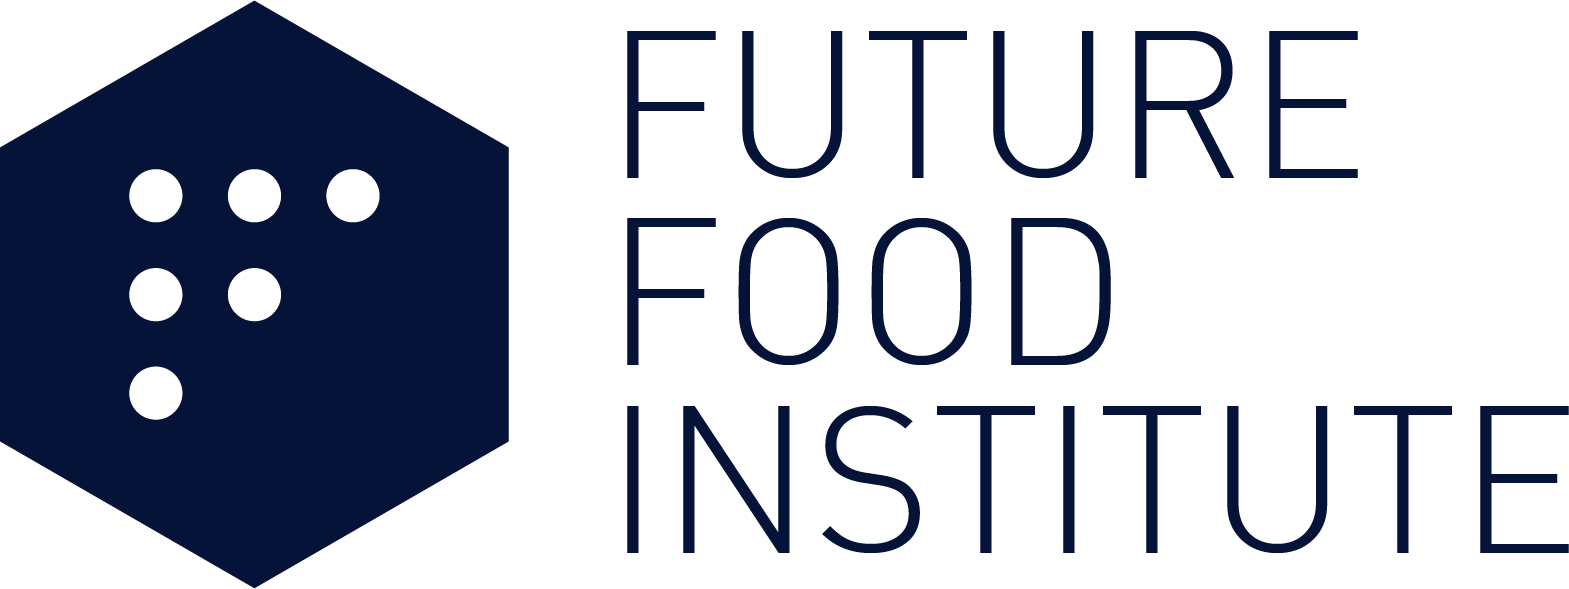 futurefoodinstitute_logo.png